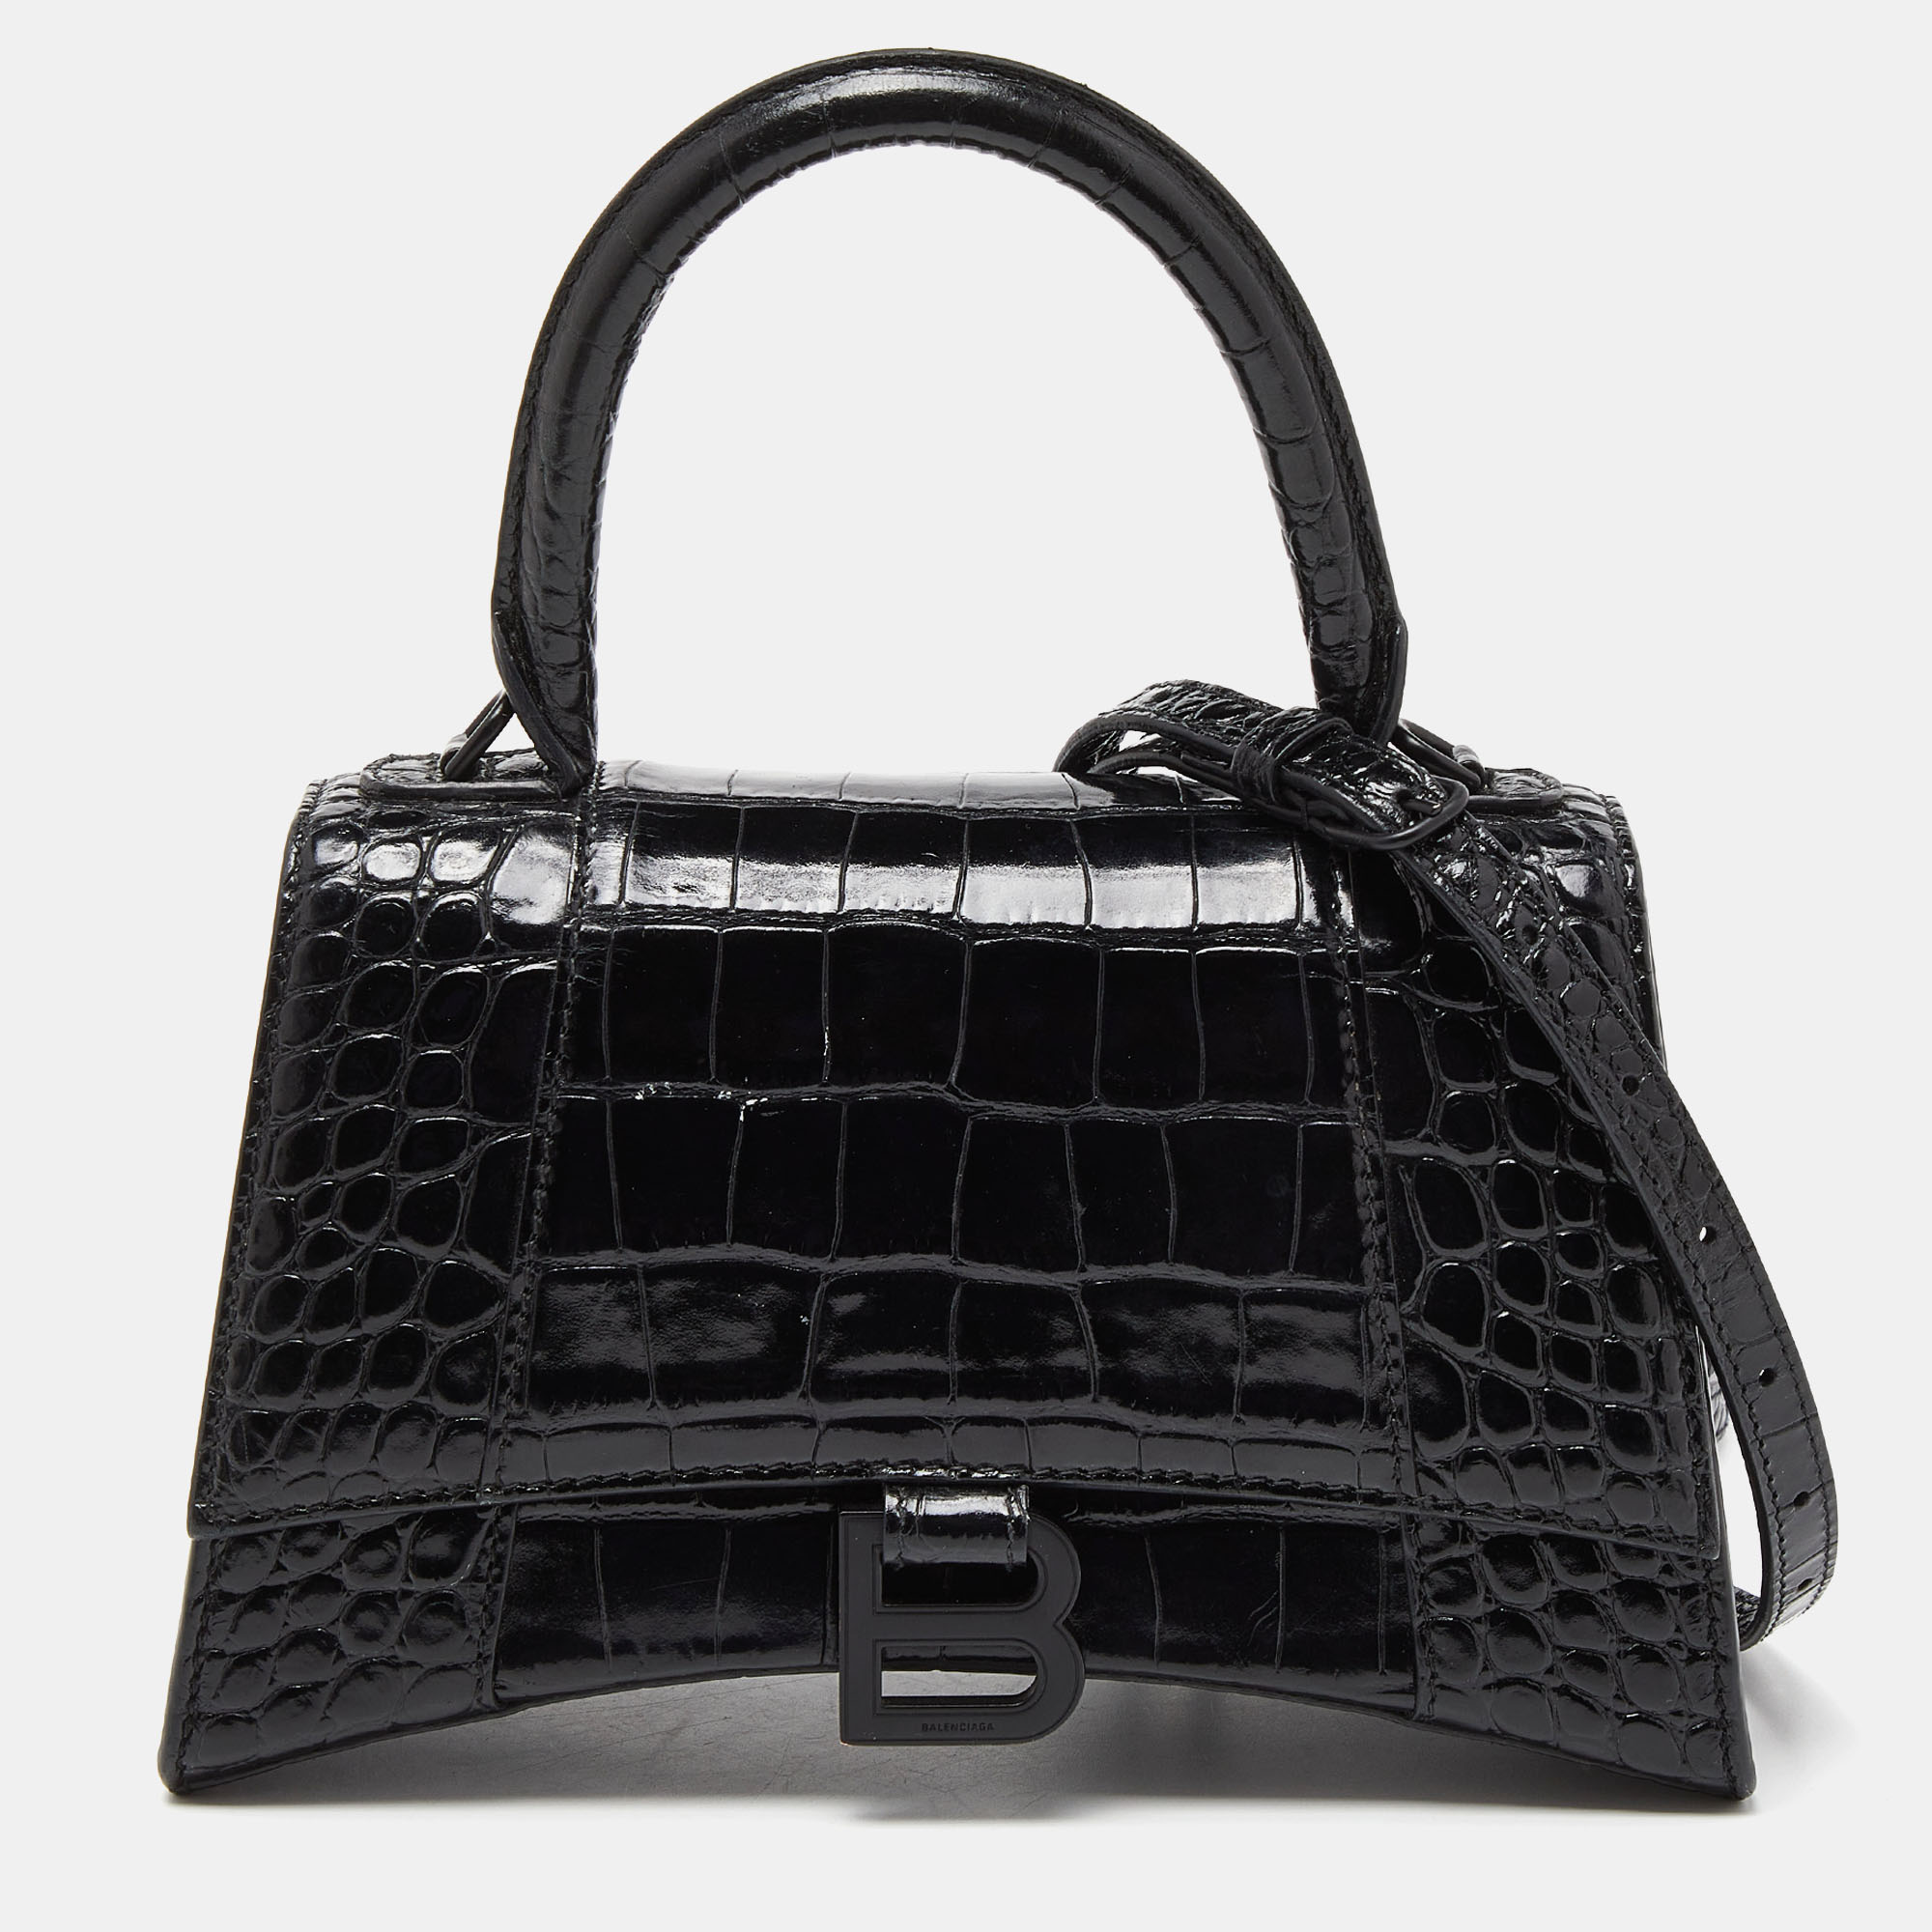 Balenciaga Black Croc Embossed Leather Small Hourglass Top Handle Bag